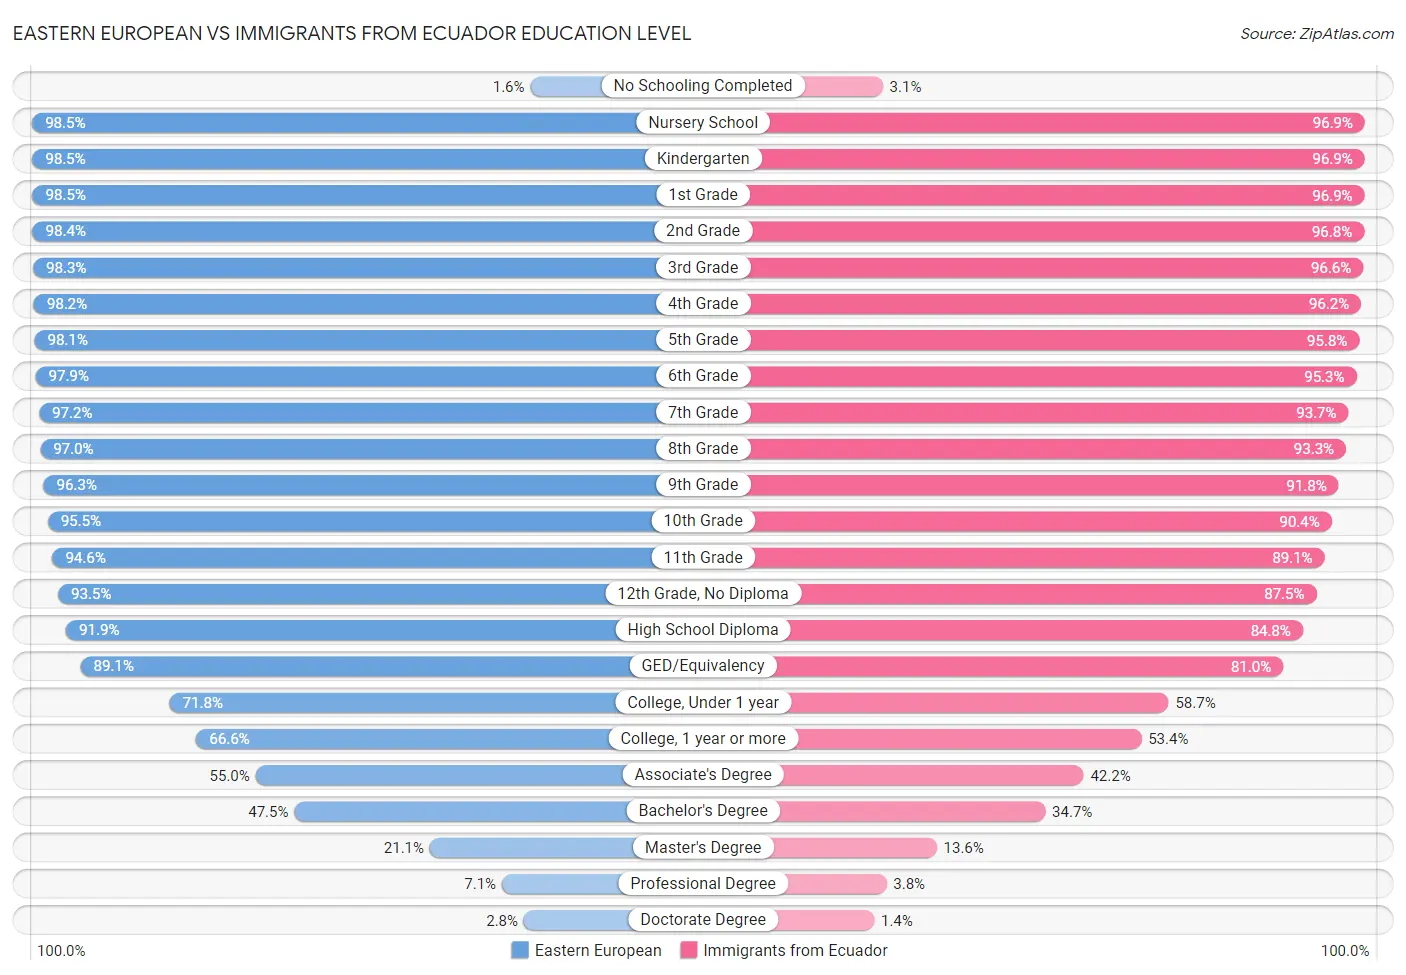 Eastern European vs Immigrants from Ecuador Education Level